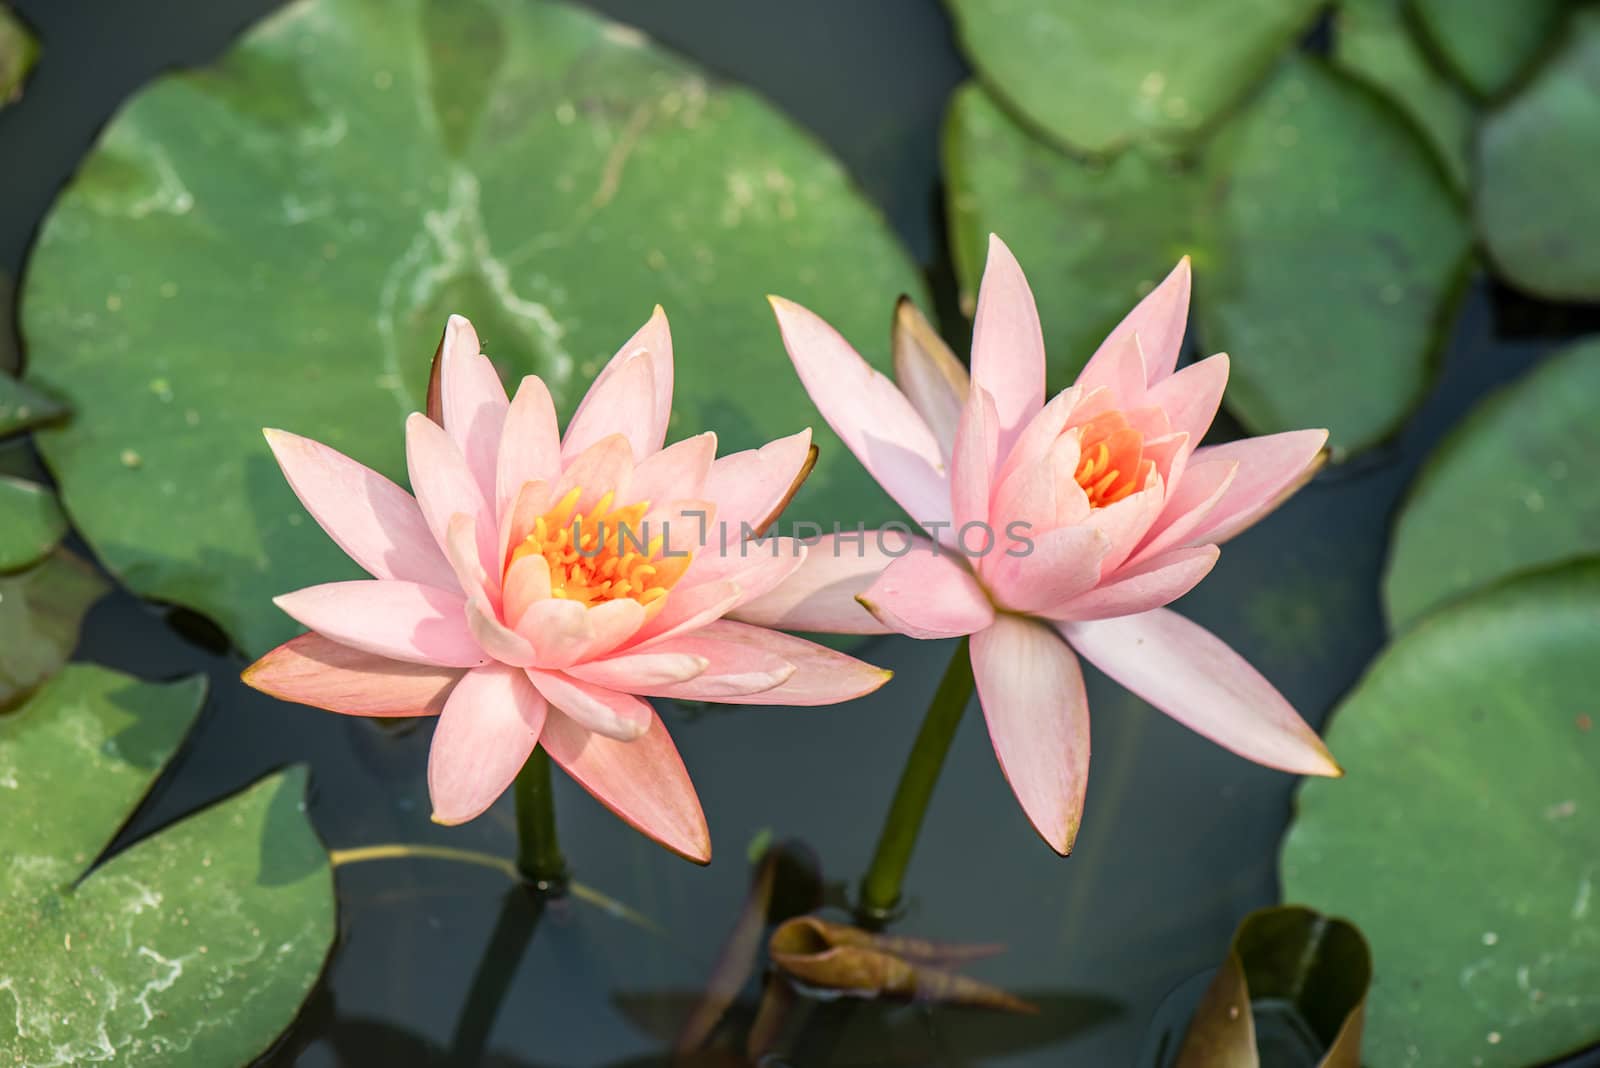  lotus flower  by wmitrmatr